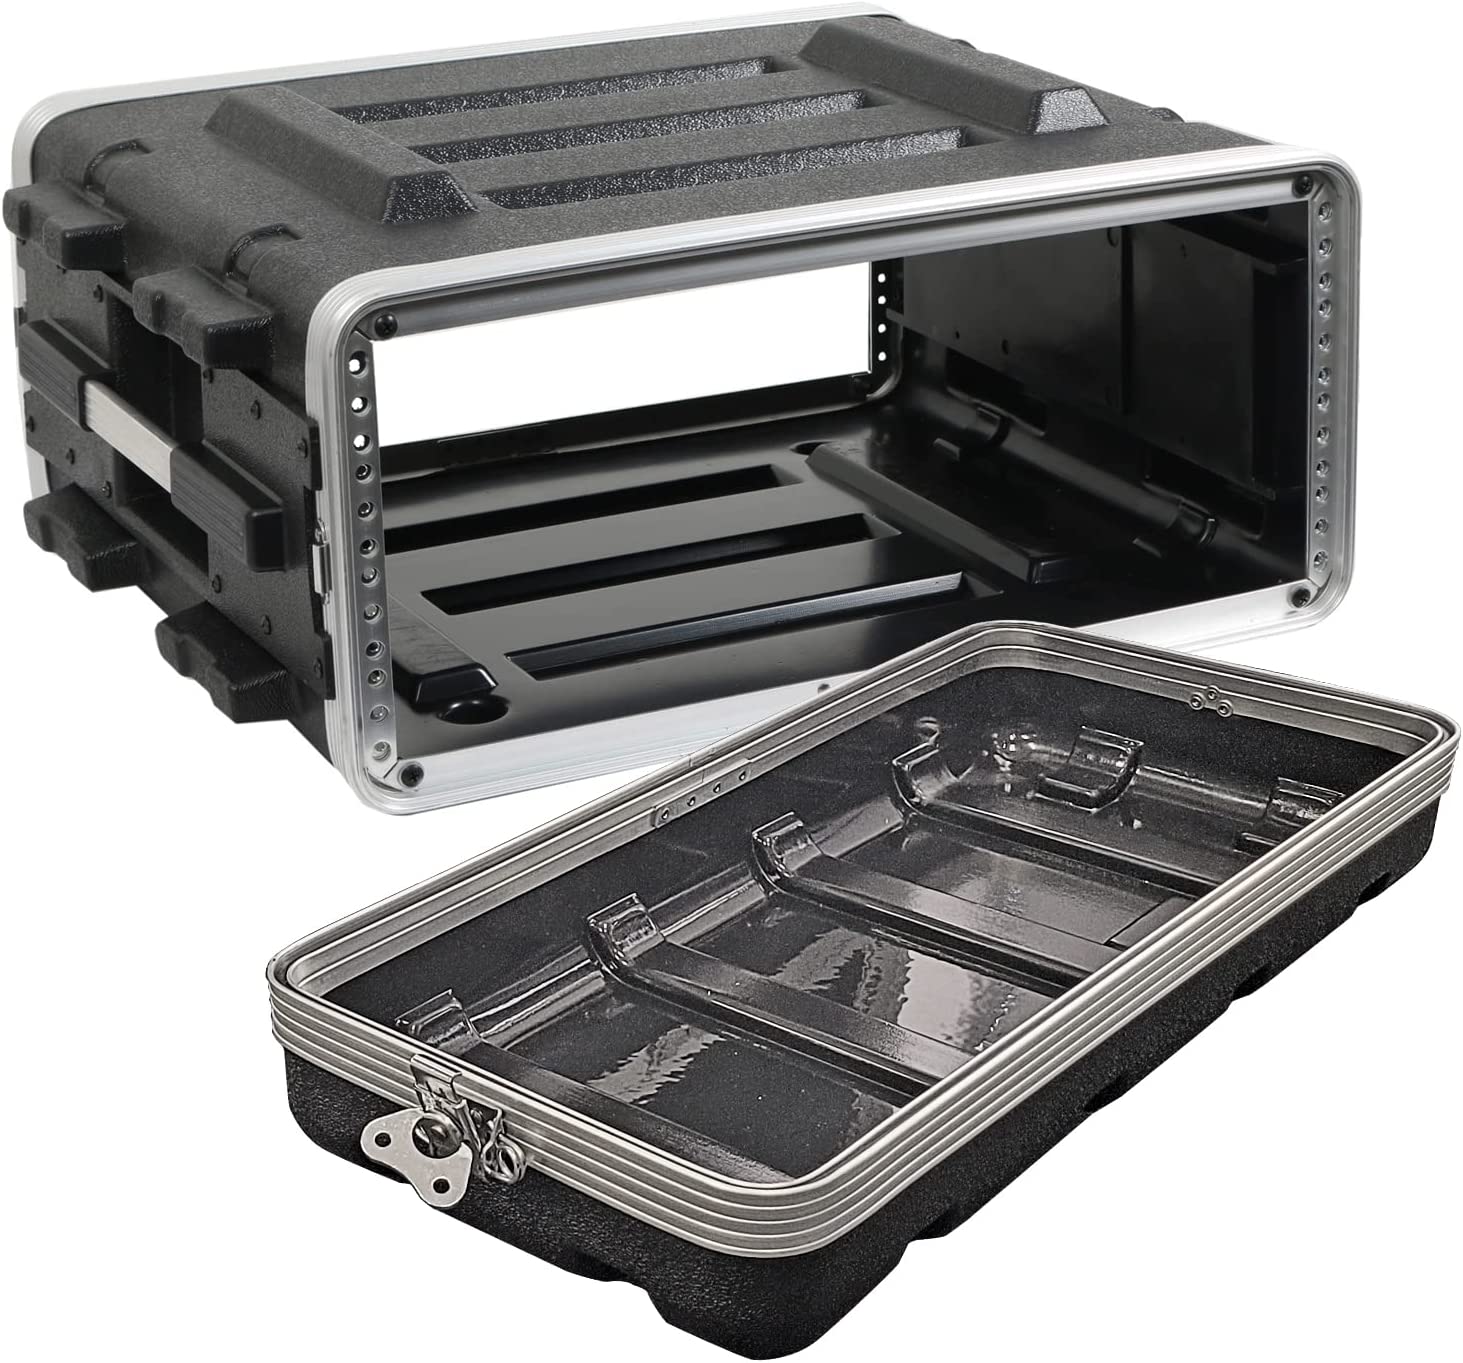 AxcessAbles ABS4U19 4U 19-Inch Depth Portable Equipment Rack Case| Lightweight DJ Rack Mount Case | Portable Compact Rack-Mount Cases with Retractable Handles (ABS4U19)